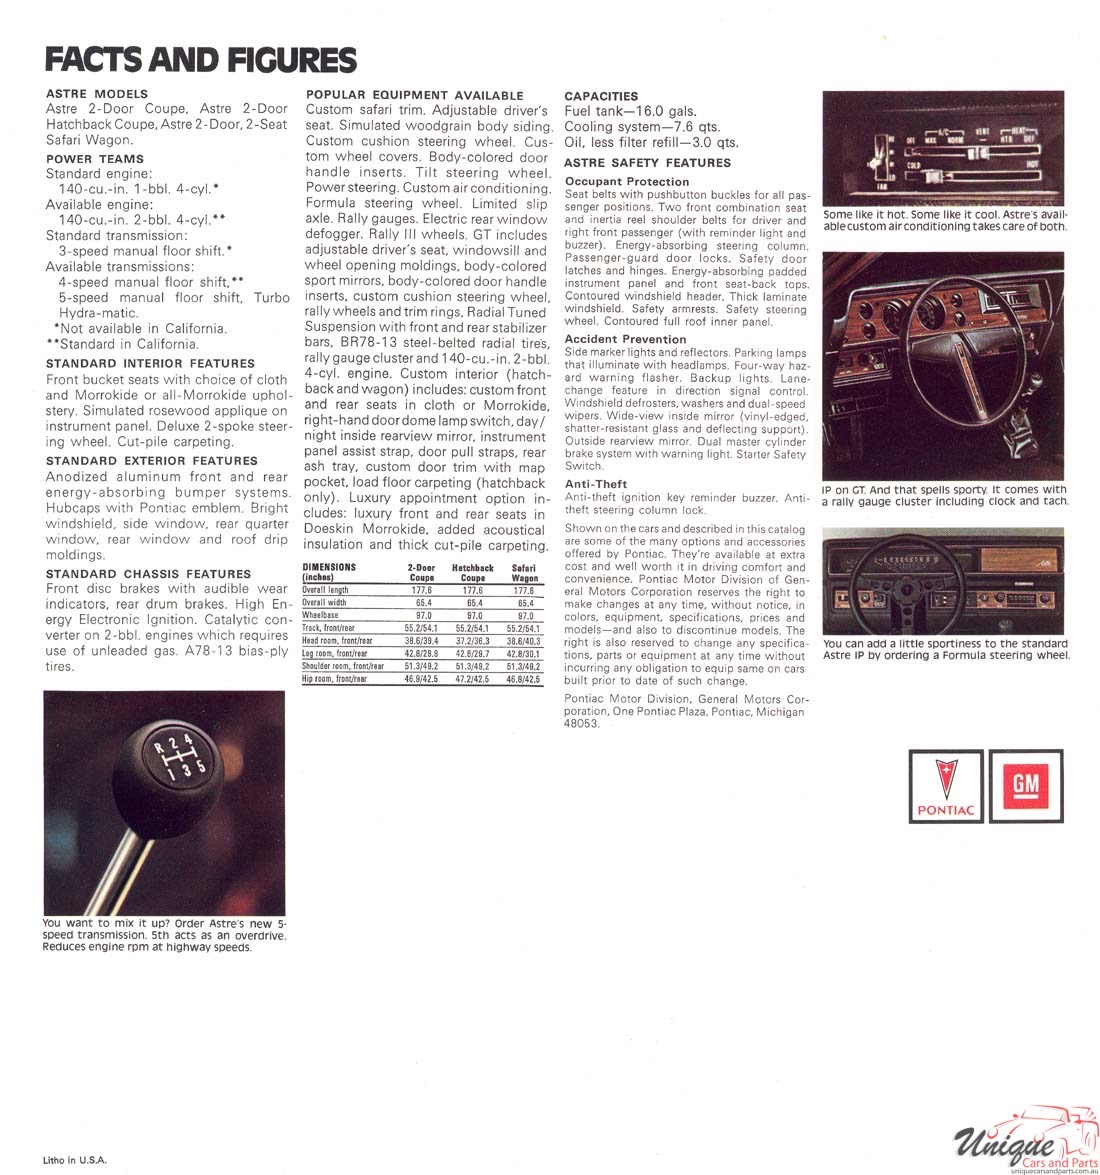 1976 Pontiac Astre Brochure Page 2